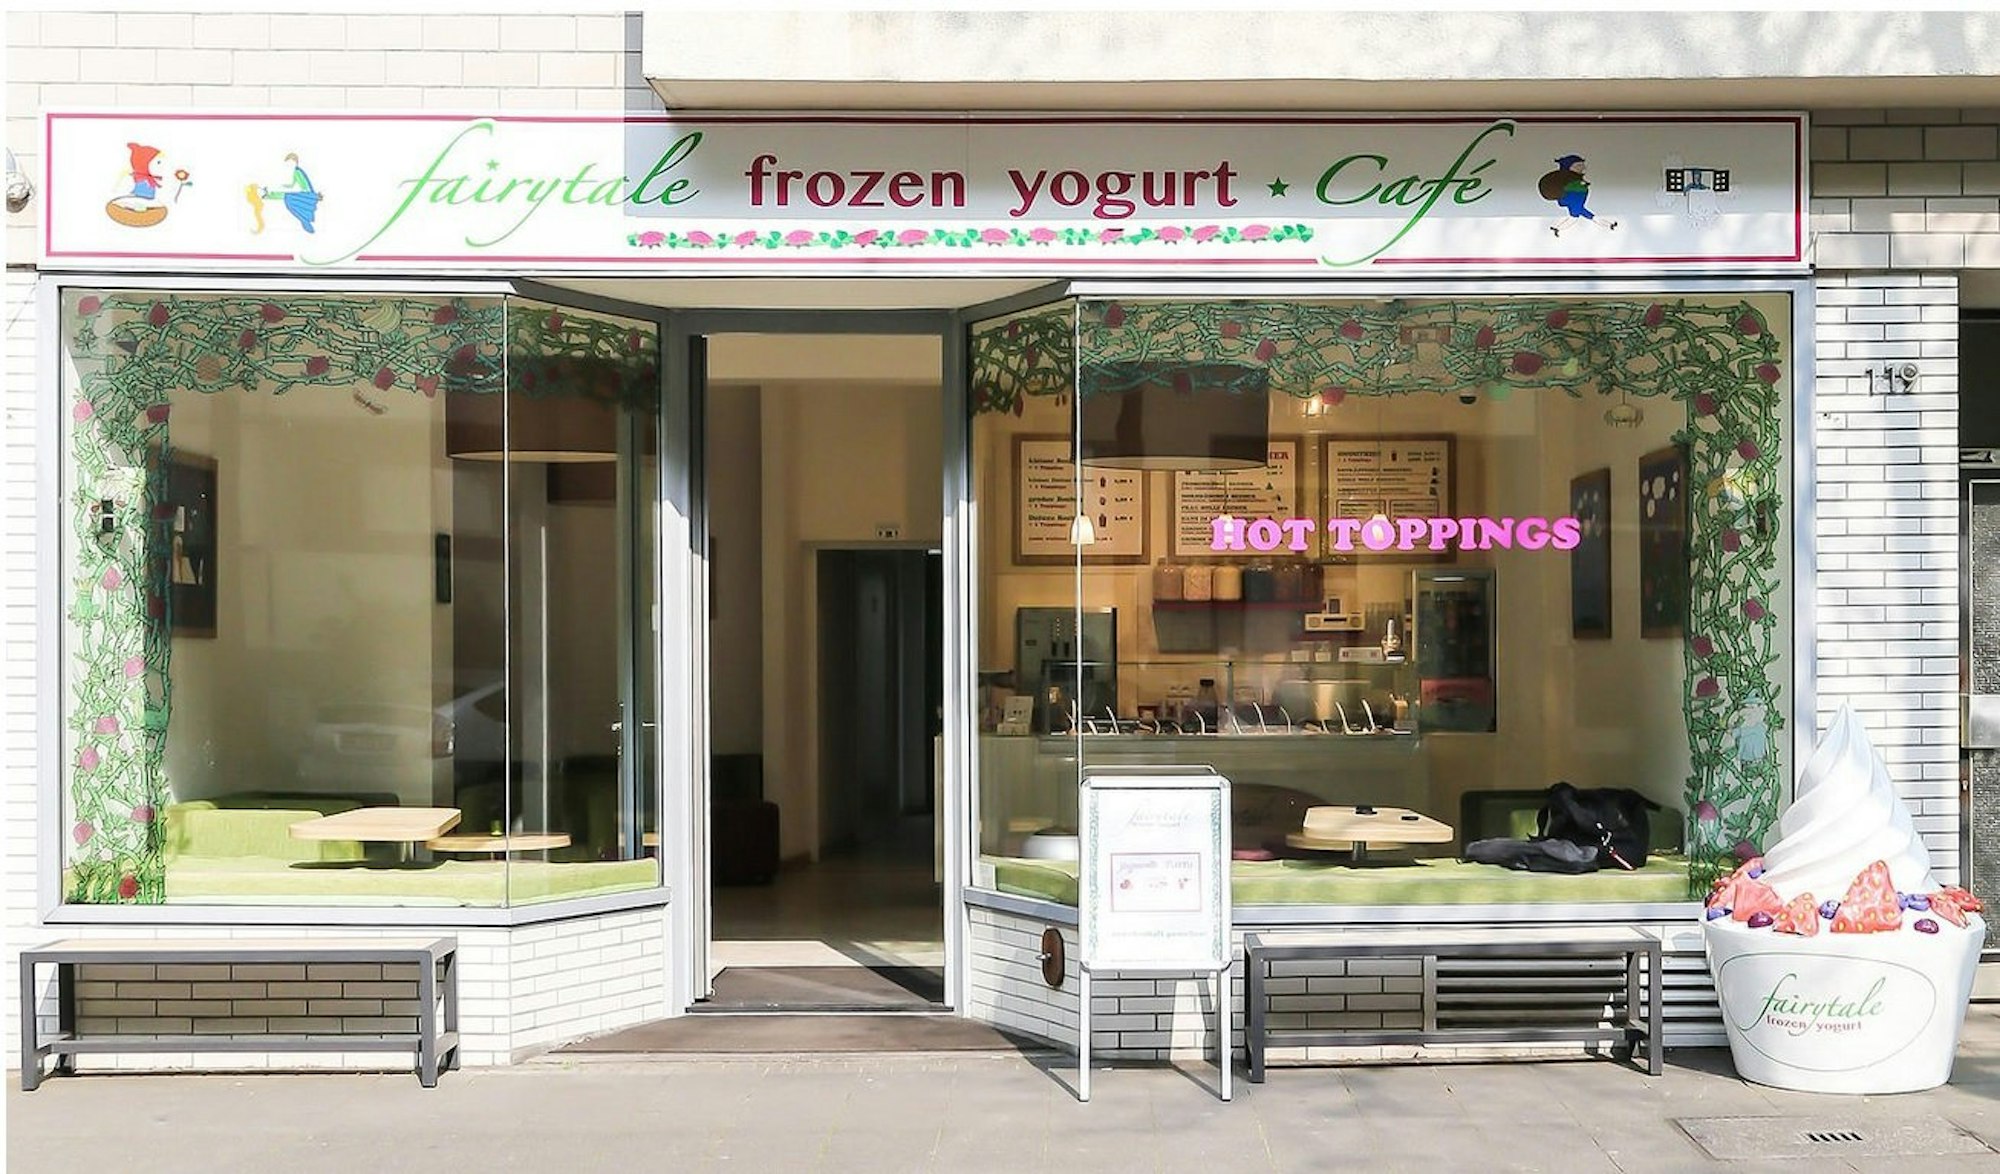 Fairytale Frozen Yogurt in Köln.